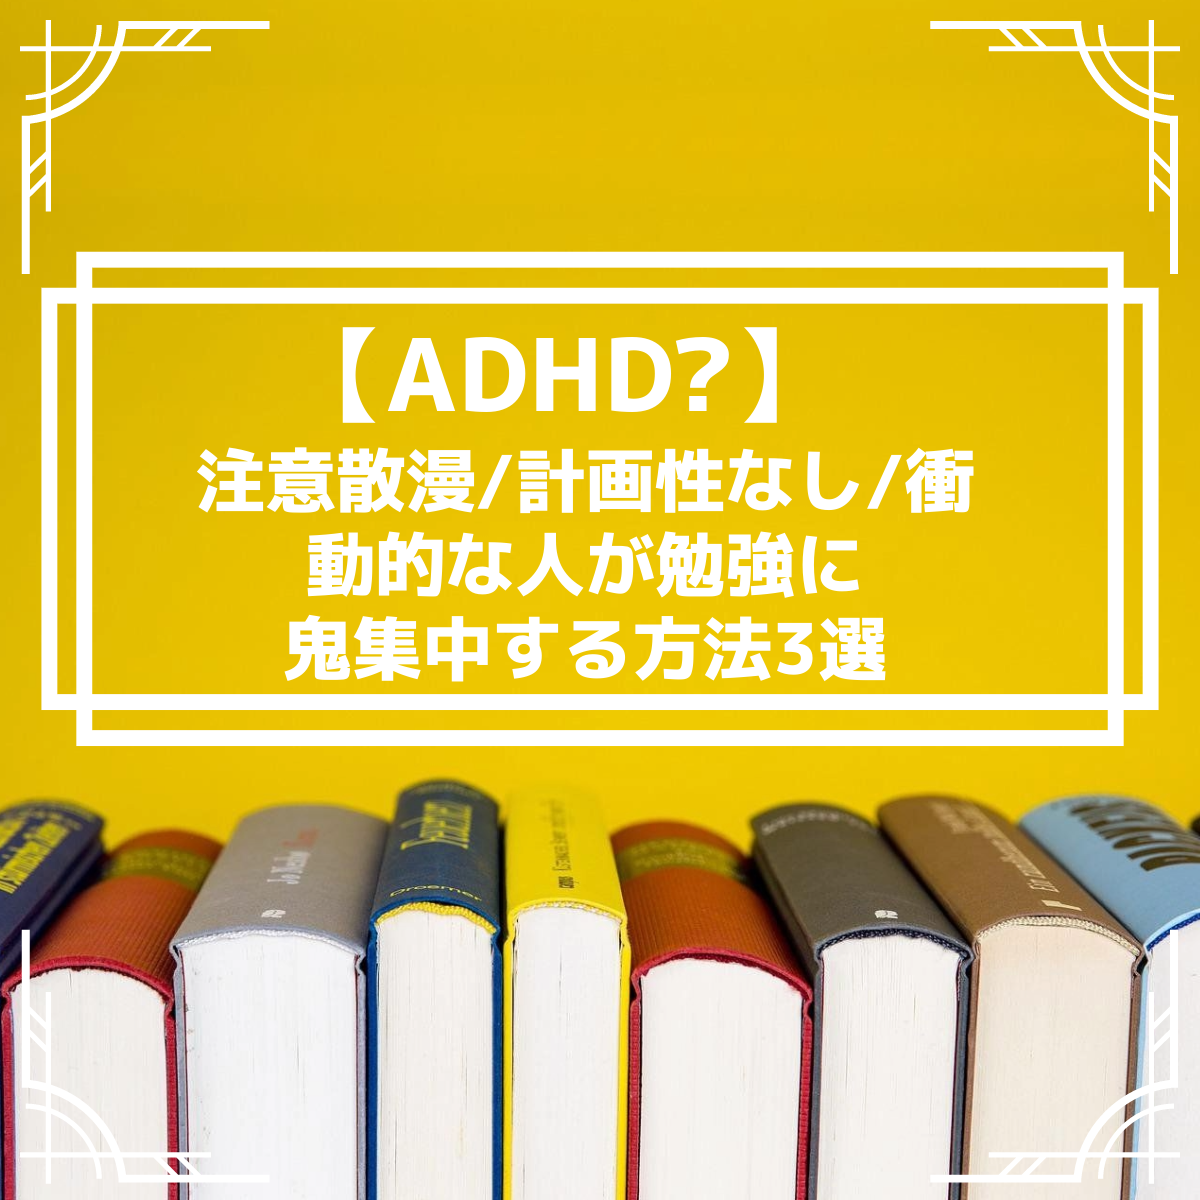 【ADHD?】注意散漫/計画性なし/衝動的な人が勉強に鬼集中する方法3選